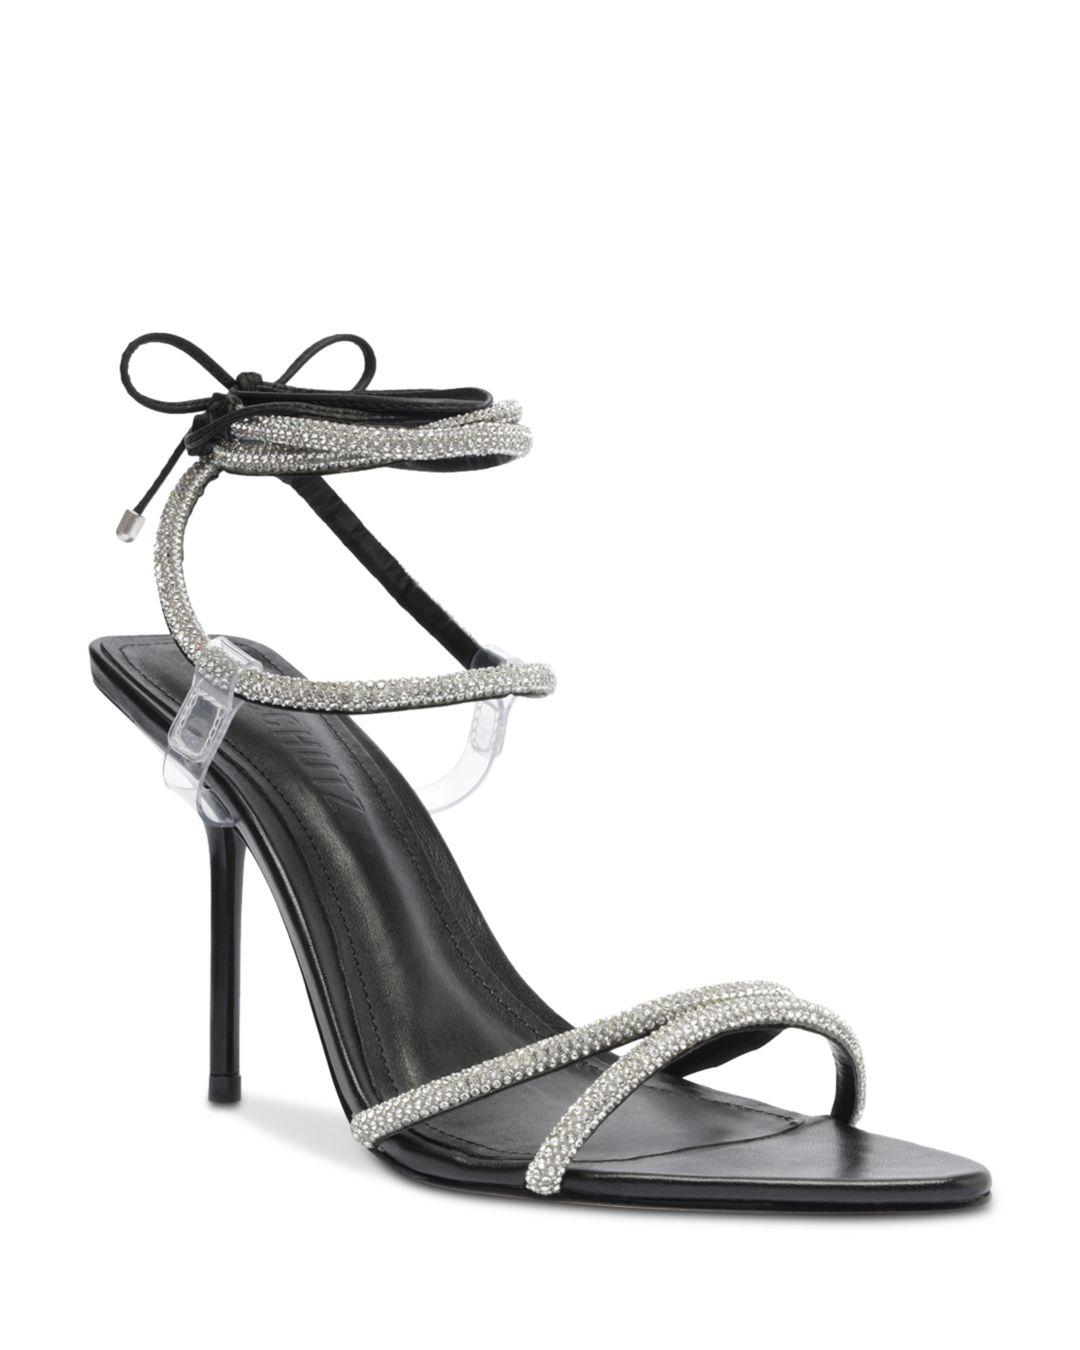 SCHUTZ SHOES Gio Pointed Toe Rhinestone Embellished High Heel Sandals in  Metallic | Lyst